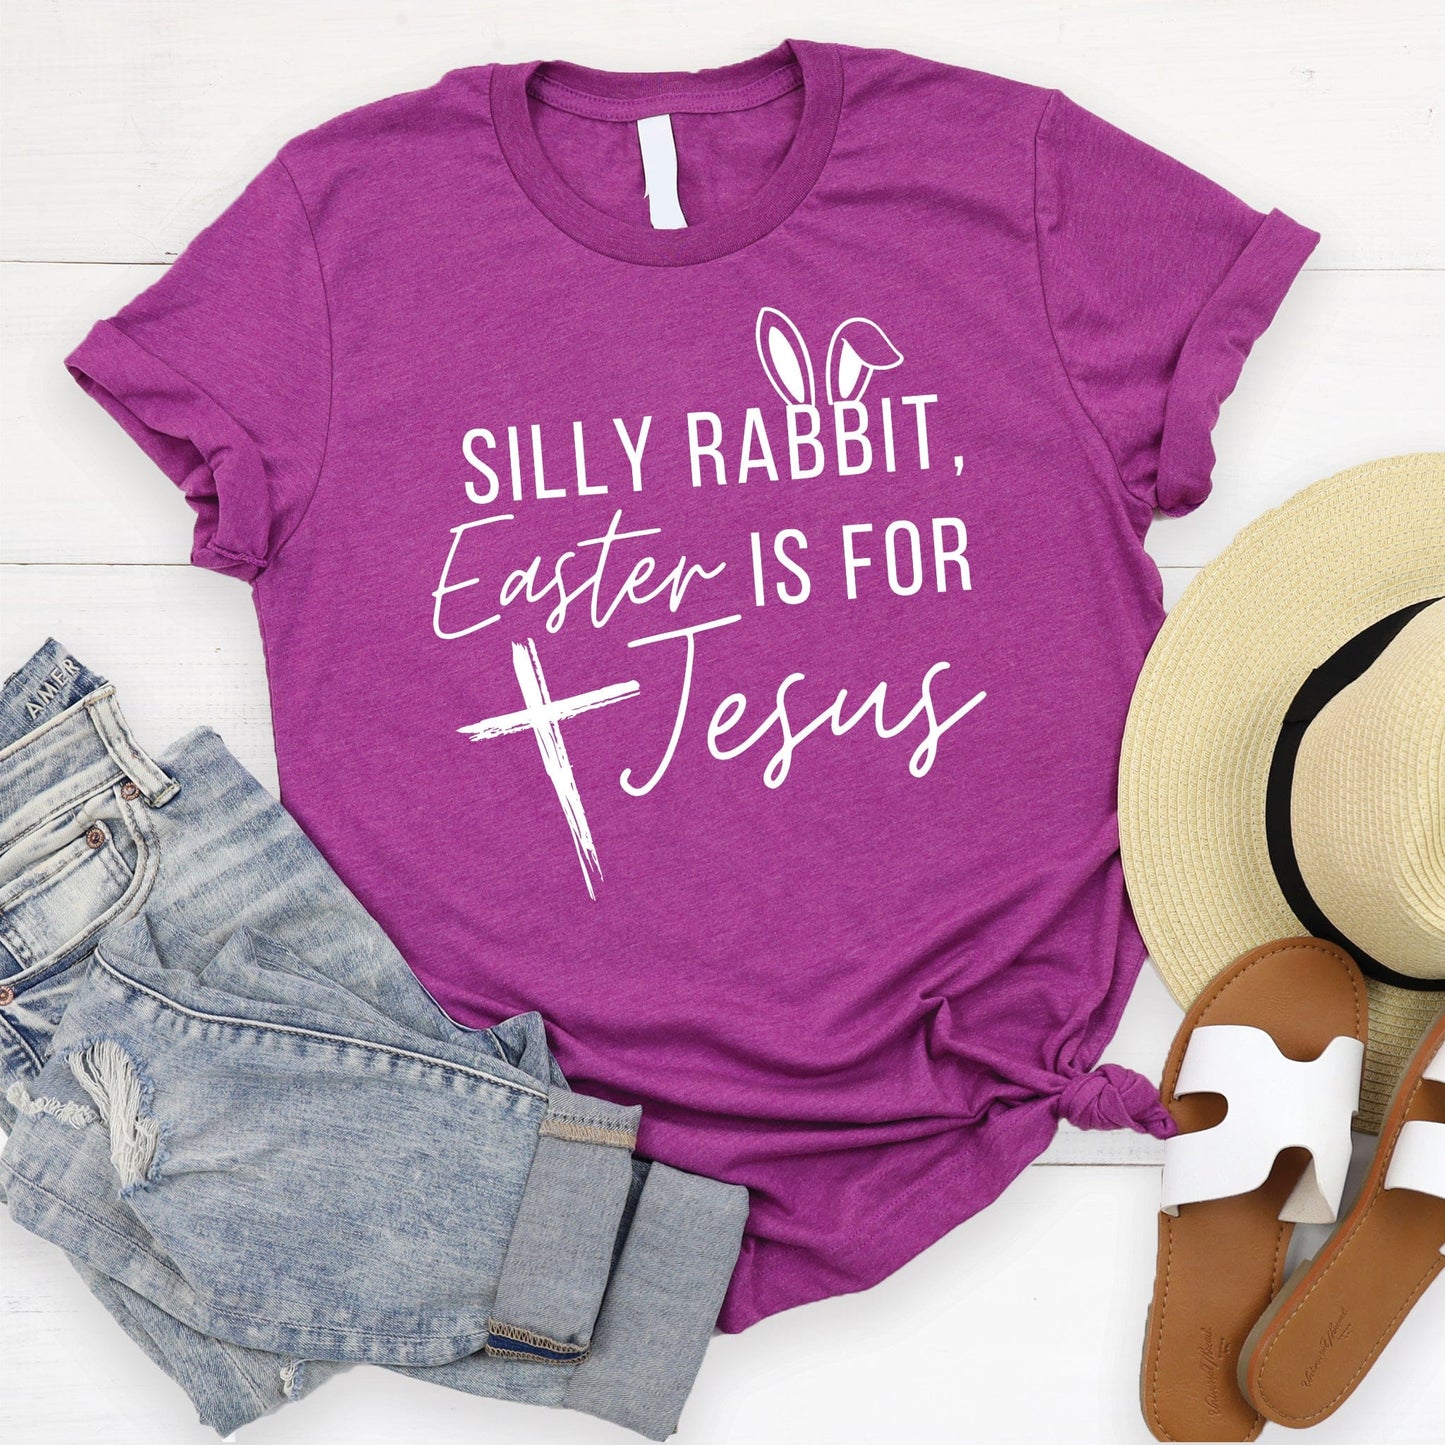 Silly Rabbit T Shirts For Women - Women's Christian T Shirts - Women's Religious Shirts